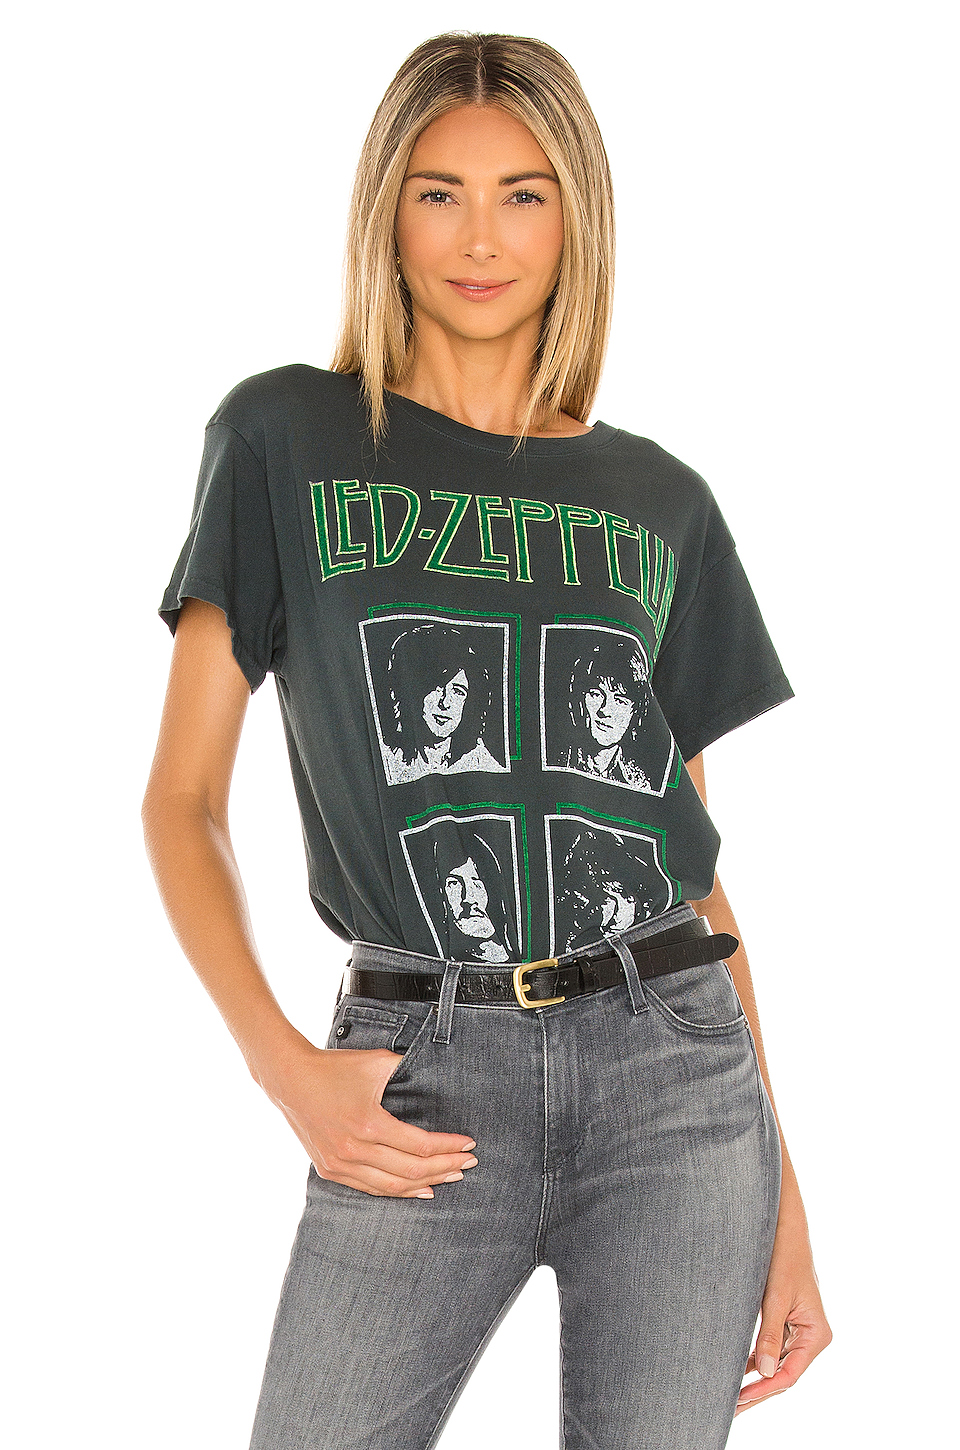 Led Zeppelin Icons Tour Tee展示图